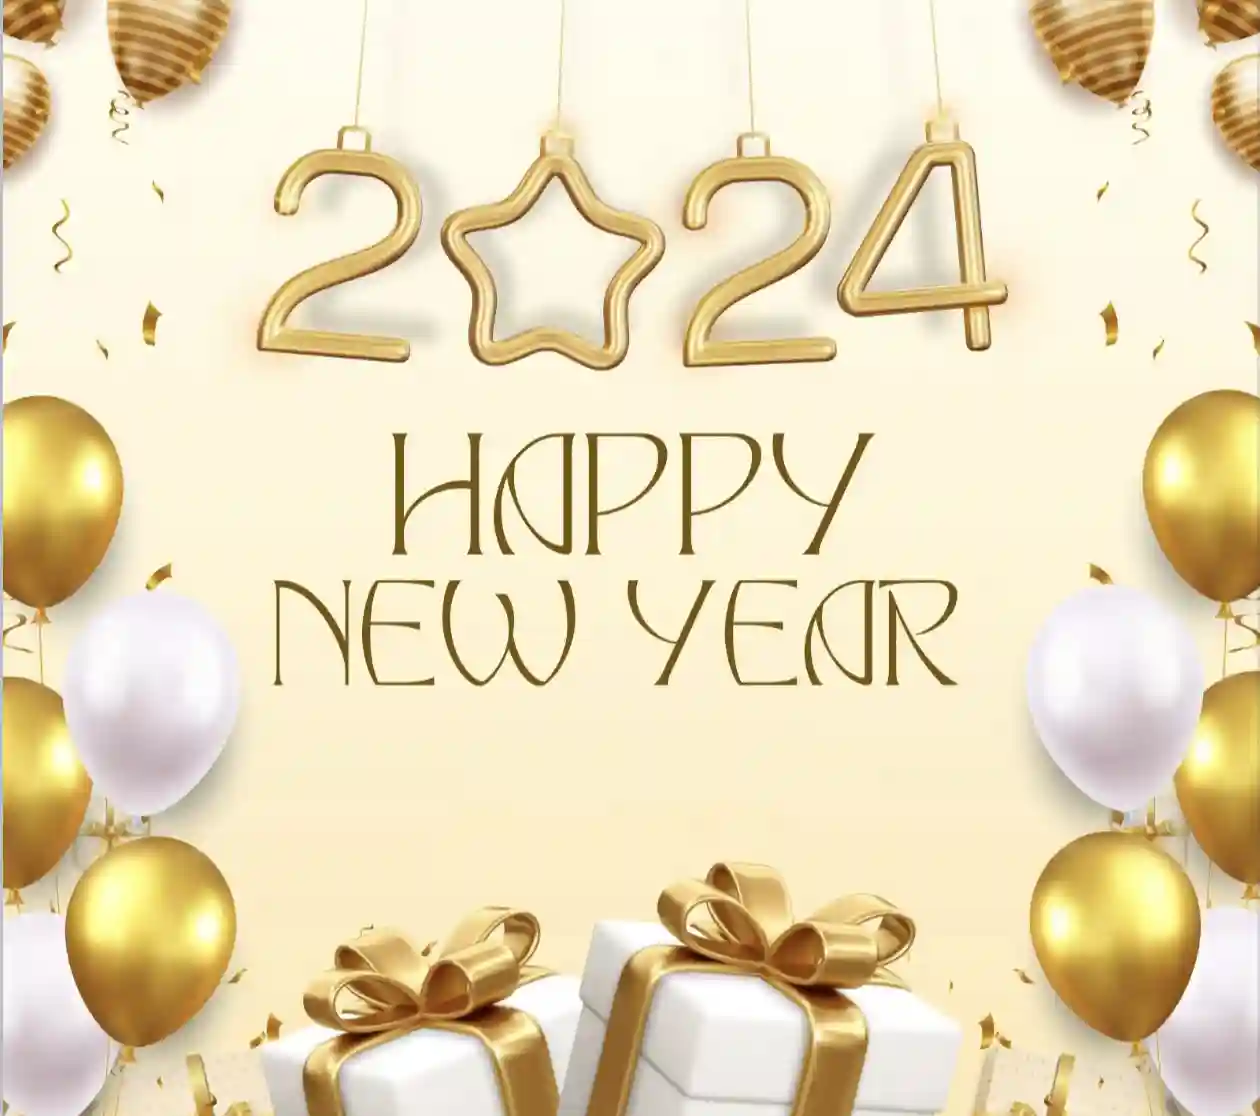 Happy New Year 2024 Images ,Wallpaper, Pictures In Bengali - হ্যাপি নিউ ইয়ার শুভেচ্ছা ছবি, পিক, ওয়ালপেপার